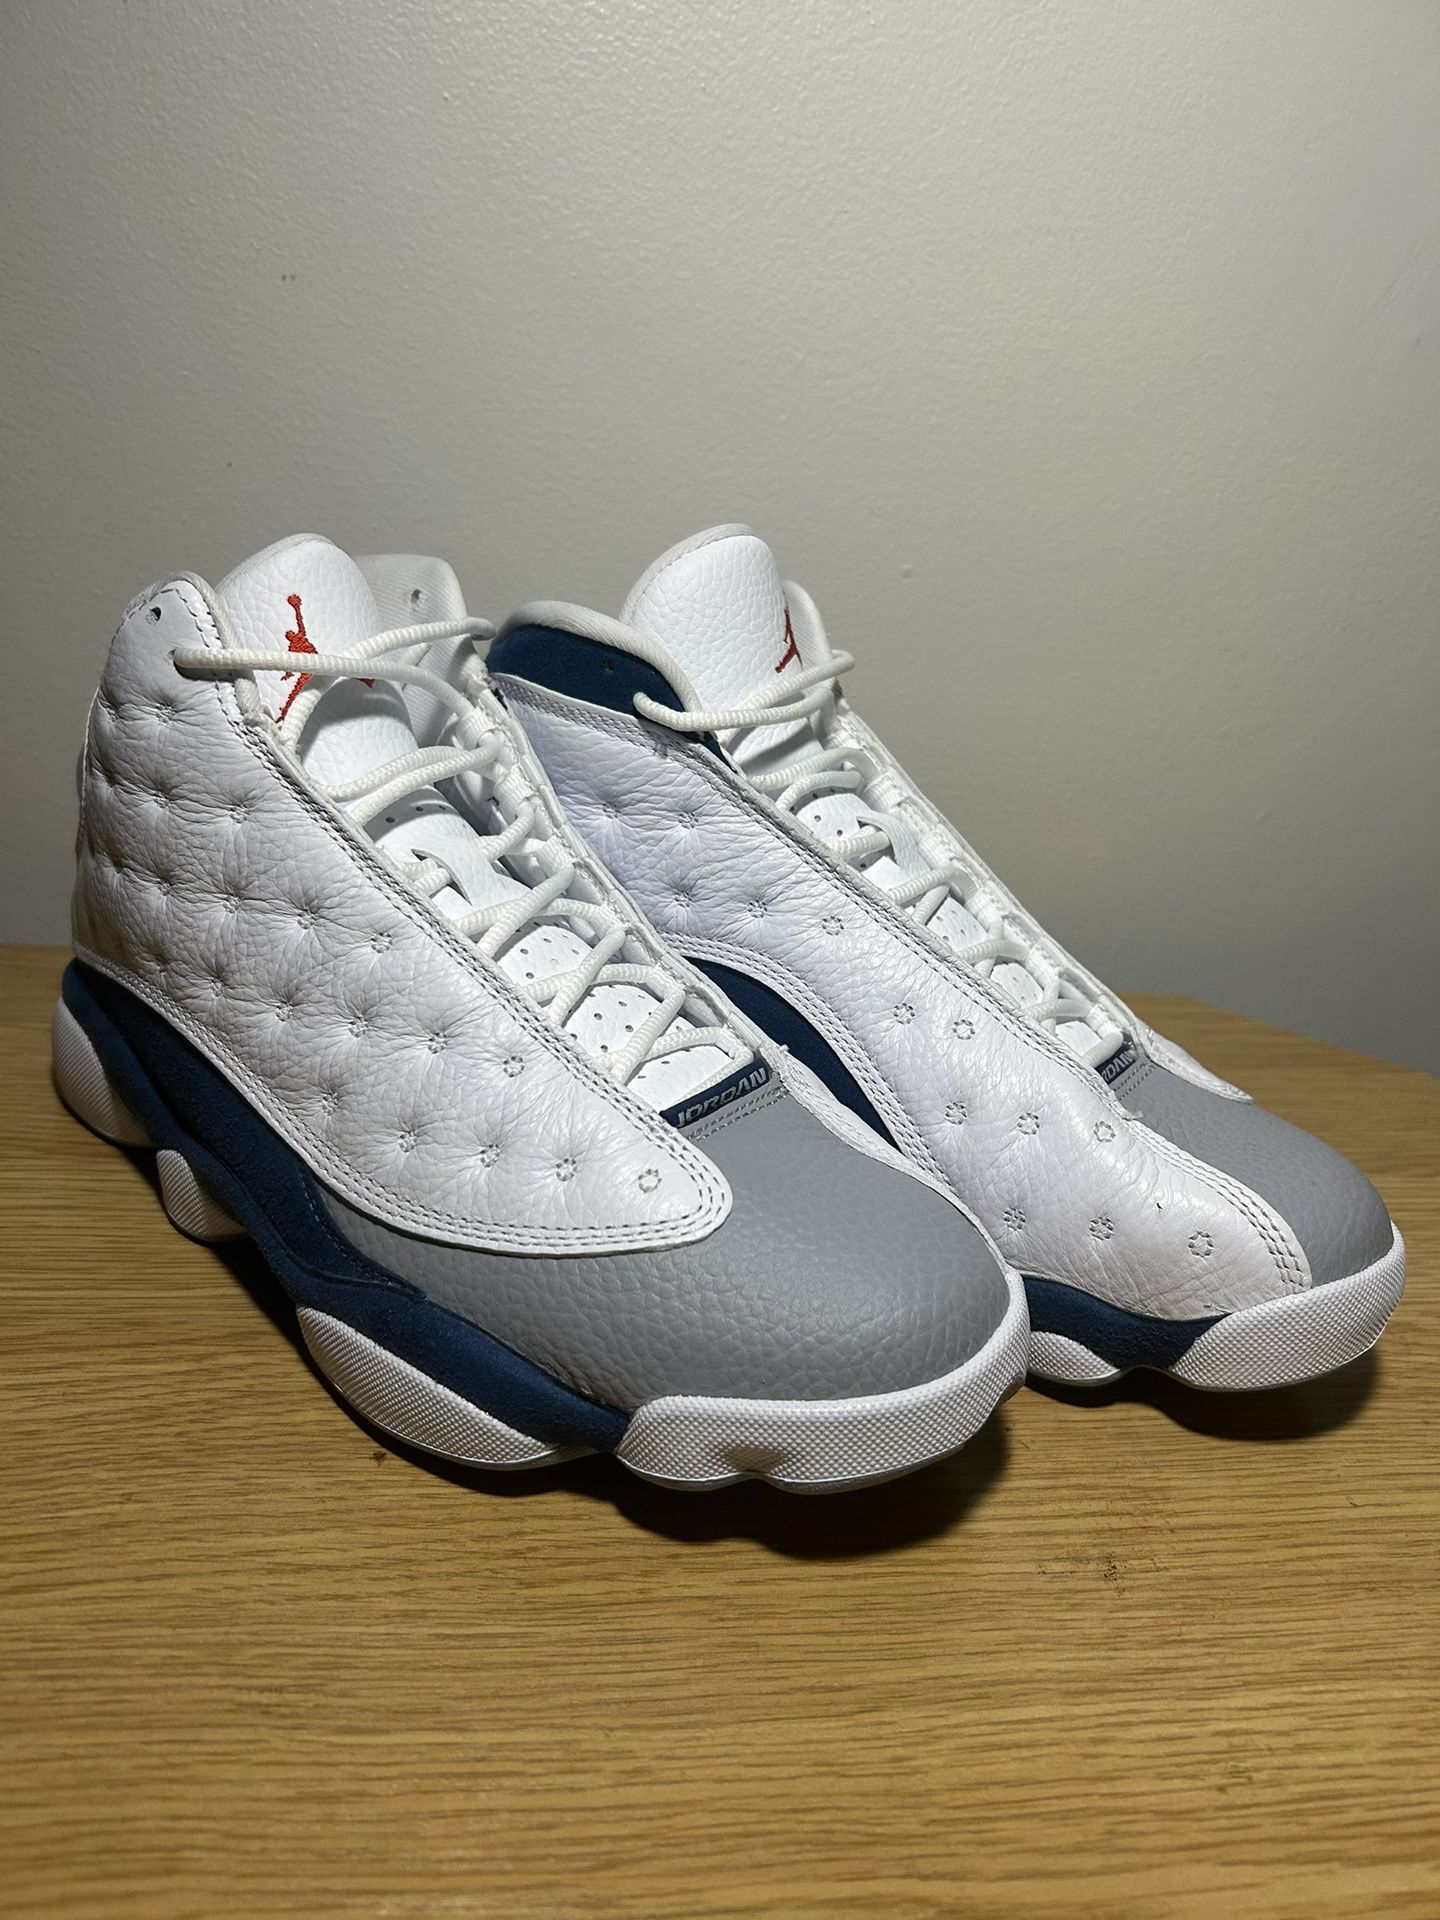 Jordan Retro 13 Blue&White  Size 8.5